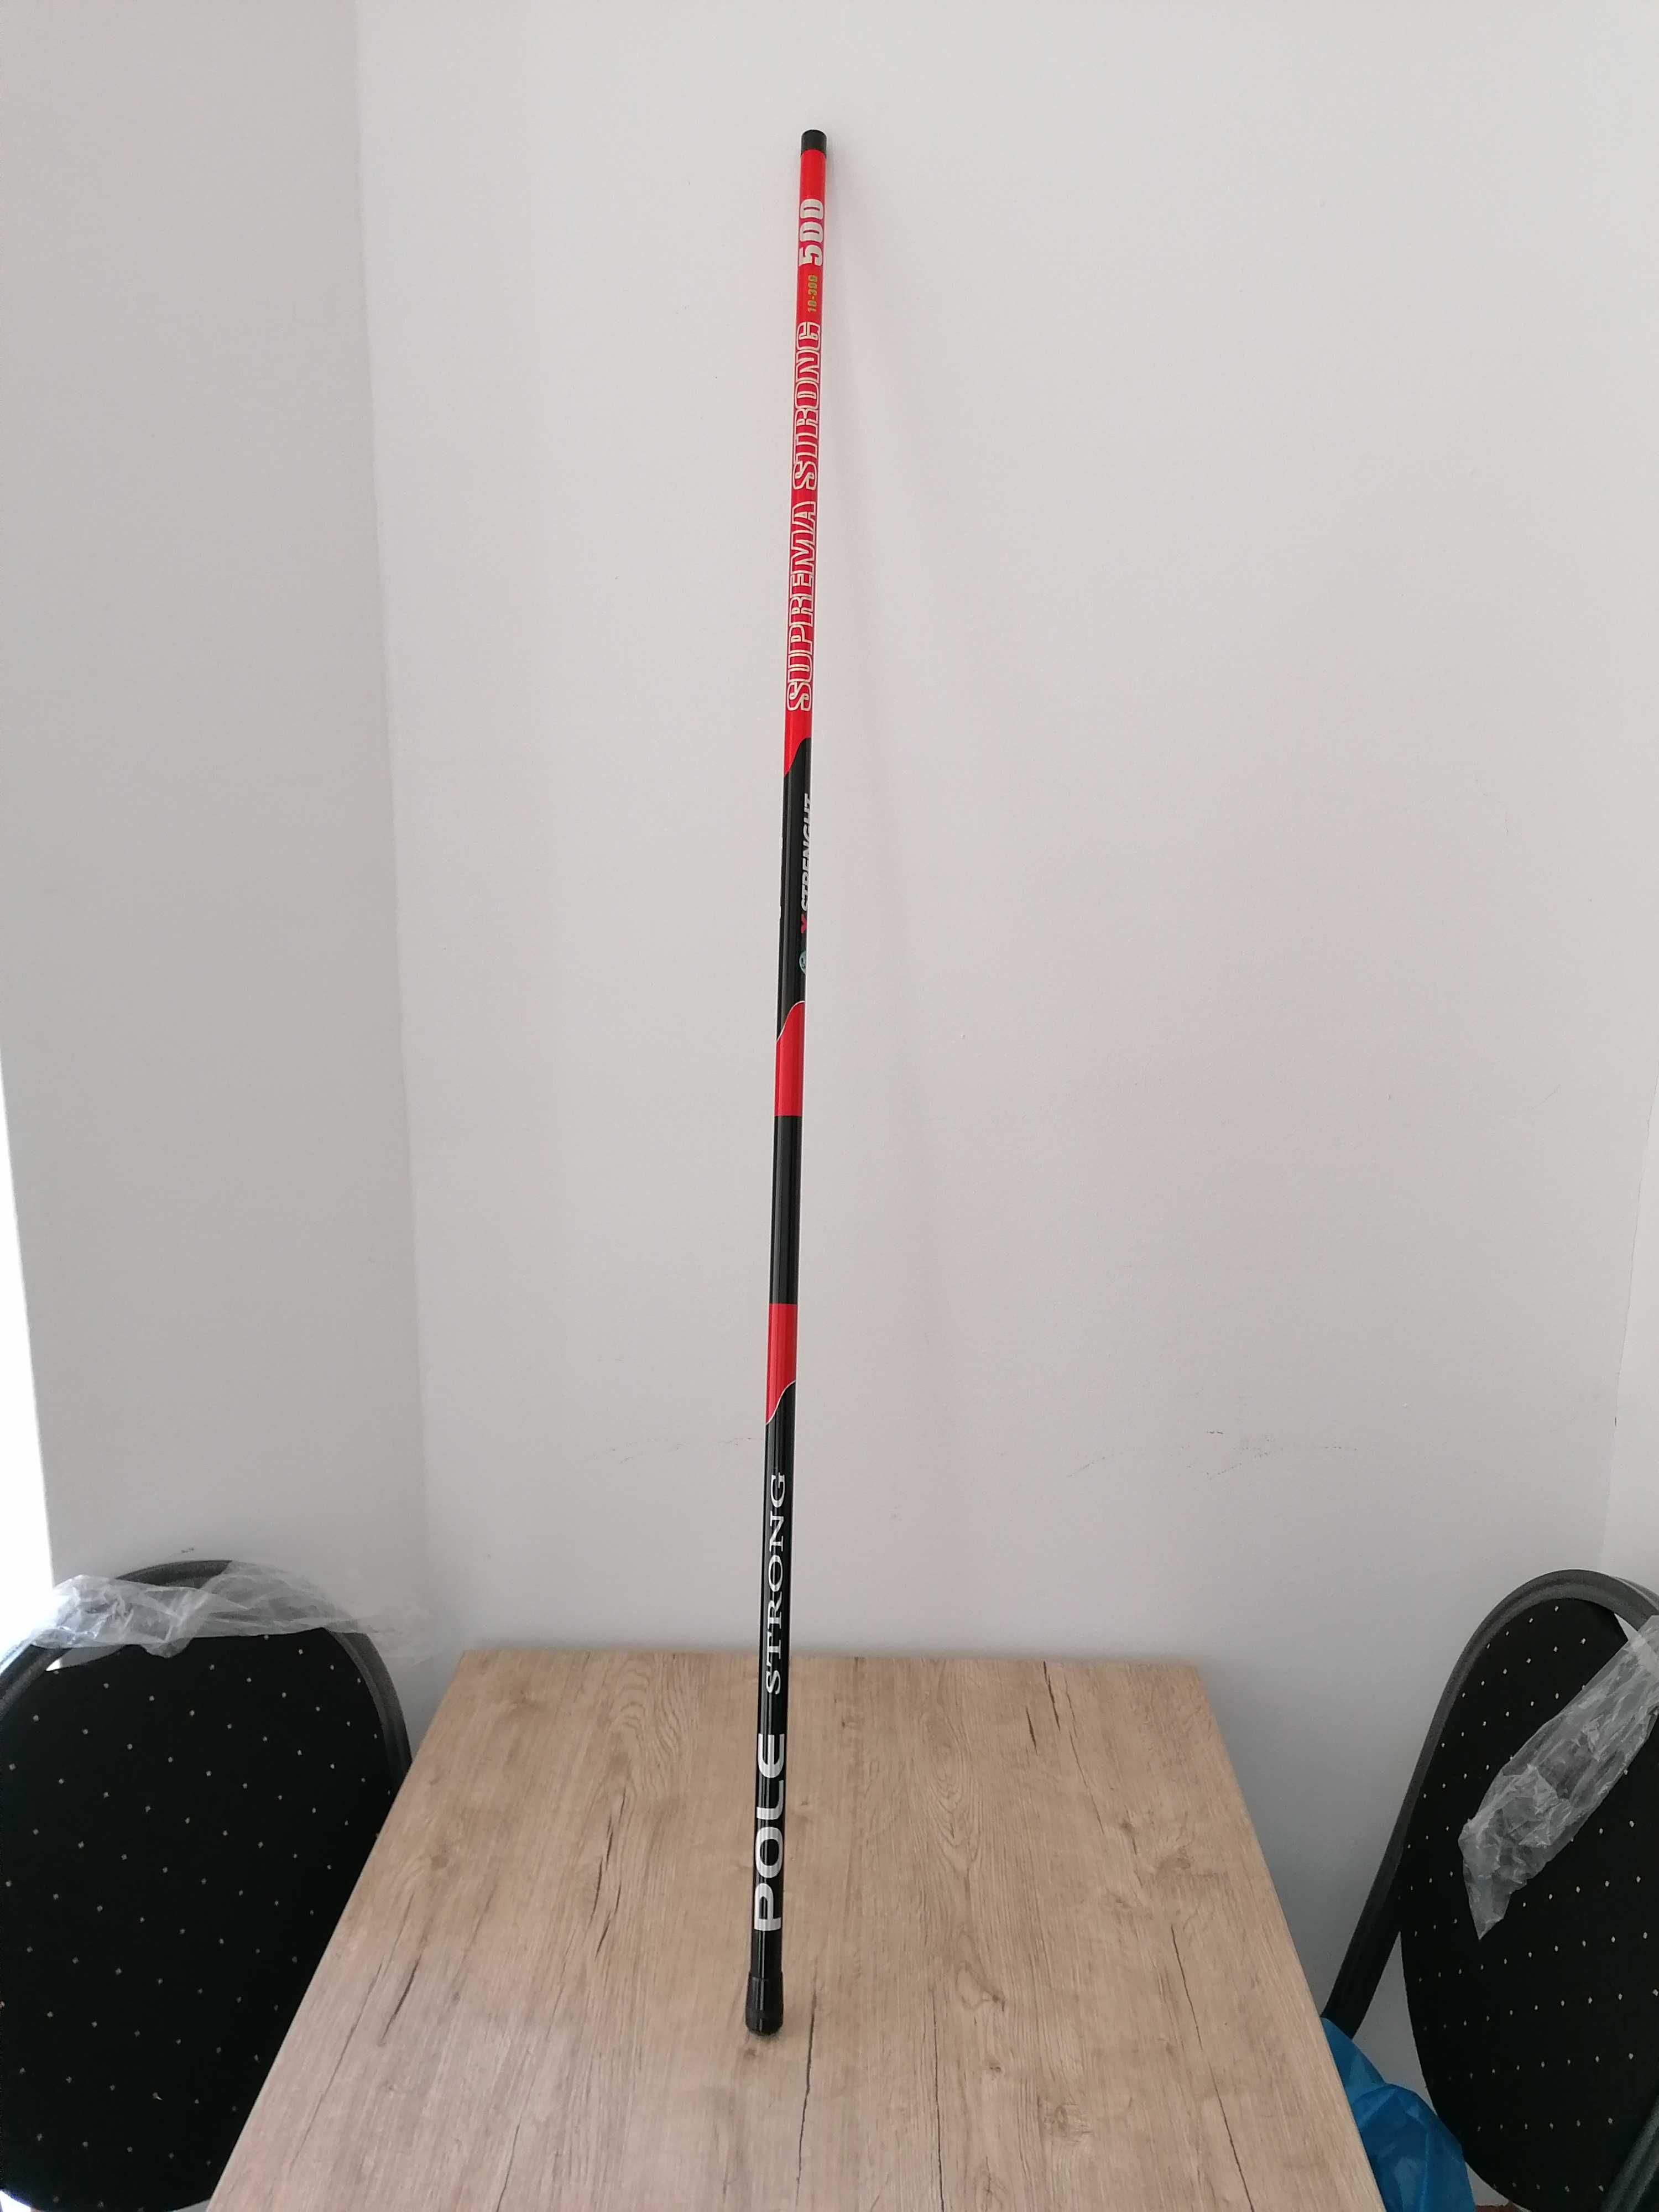 Undita/varga carbon Baracuda Suprema Strong Pole 6.0 m